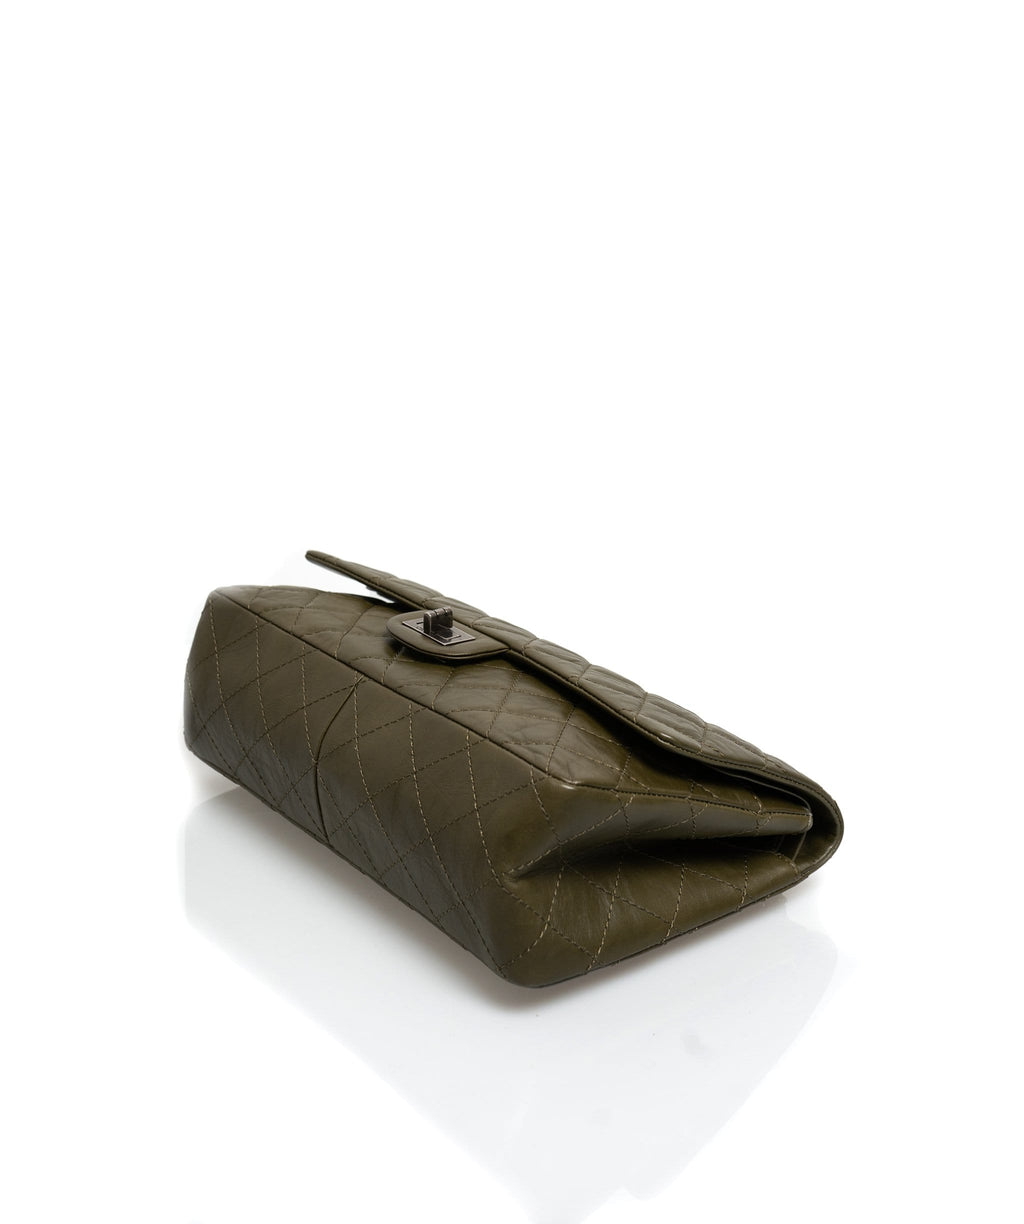 Chanel 2.55 Handbag 401845